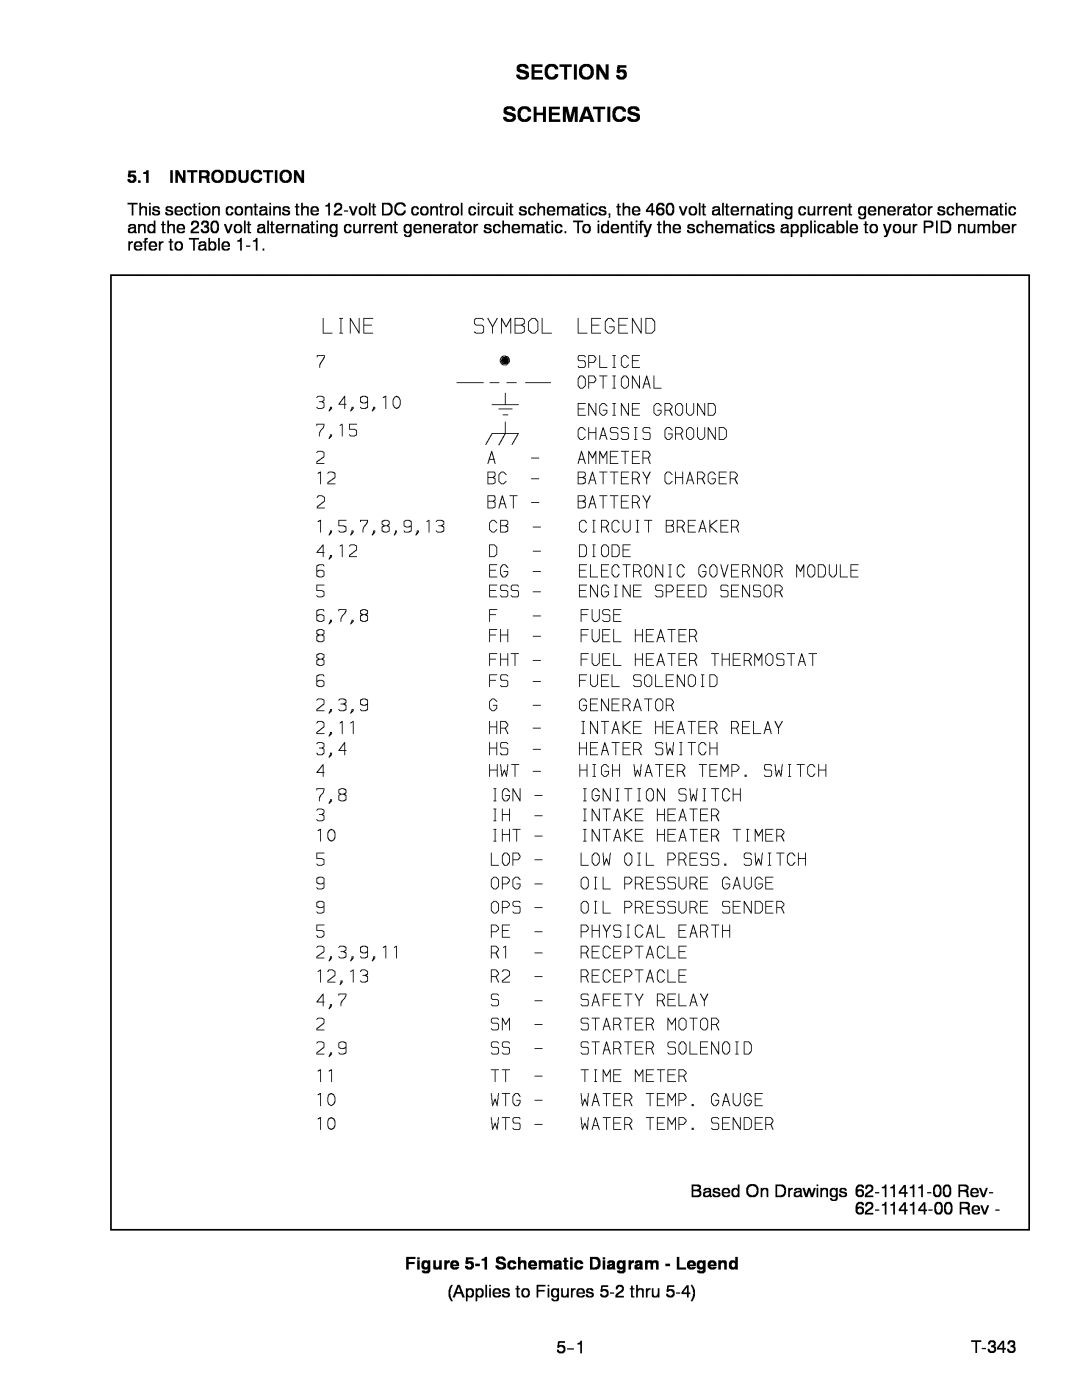 Carrier 69UG15 manual Section Schematics, Introduction, 1 Schematic Diagram - Legend 